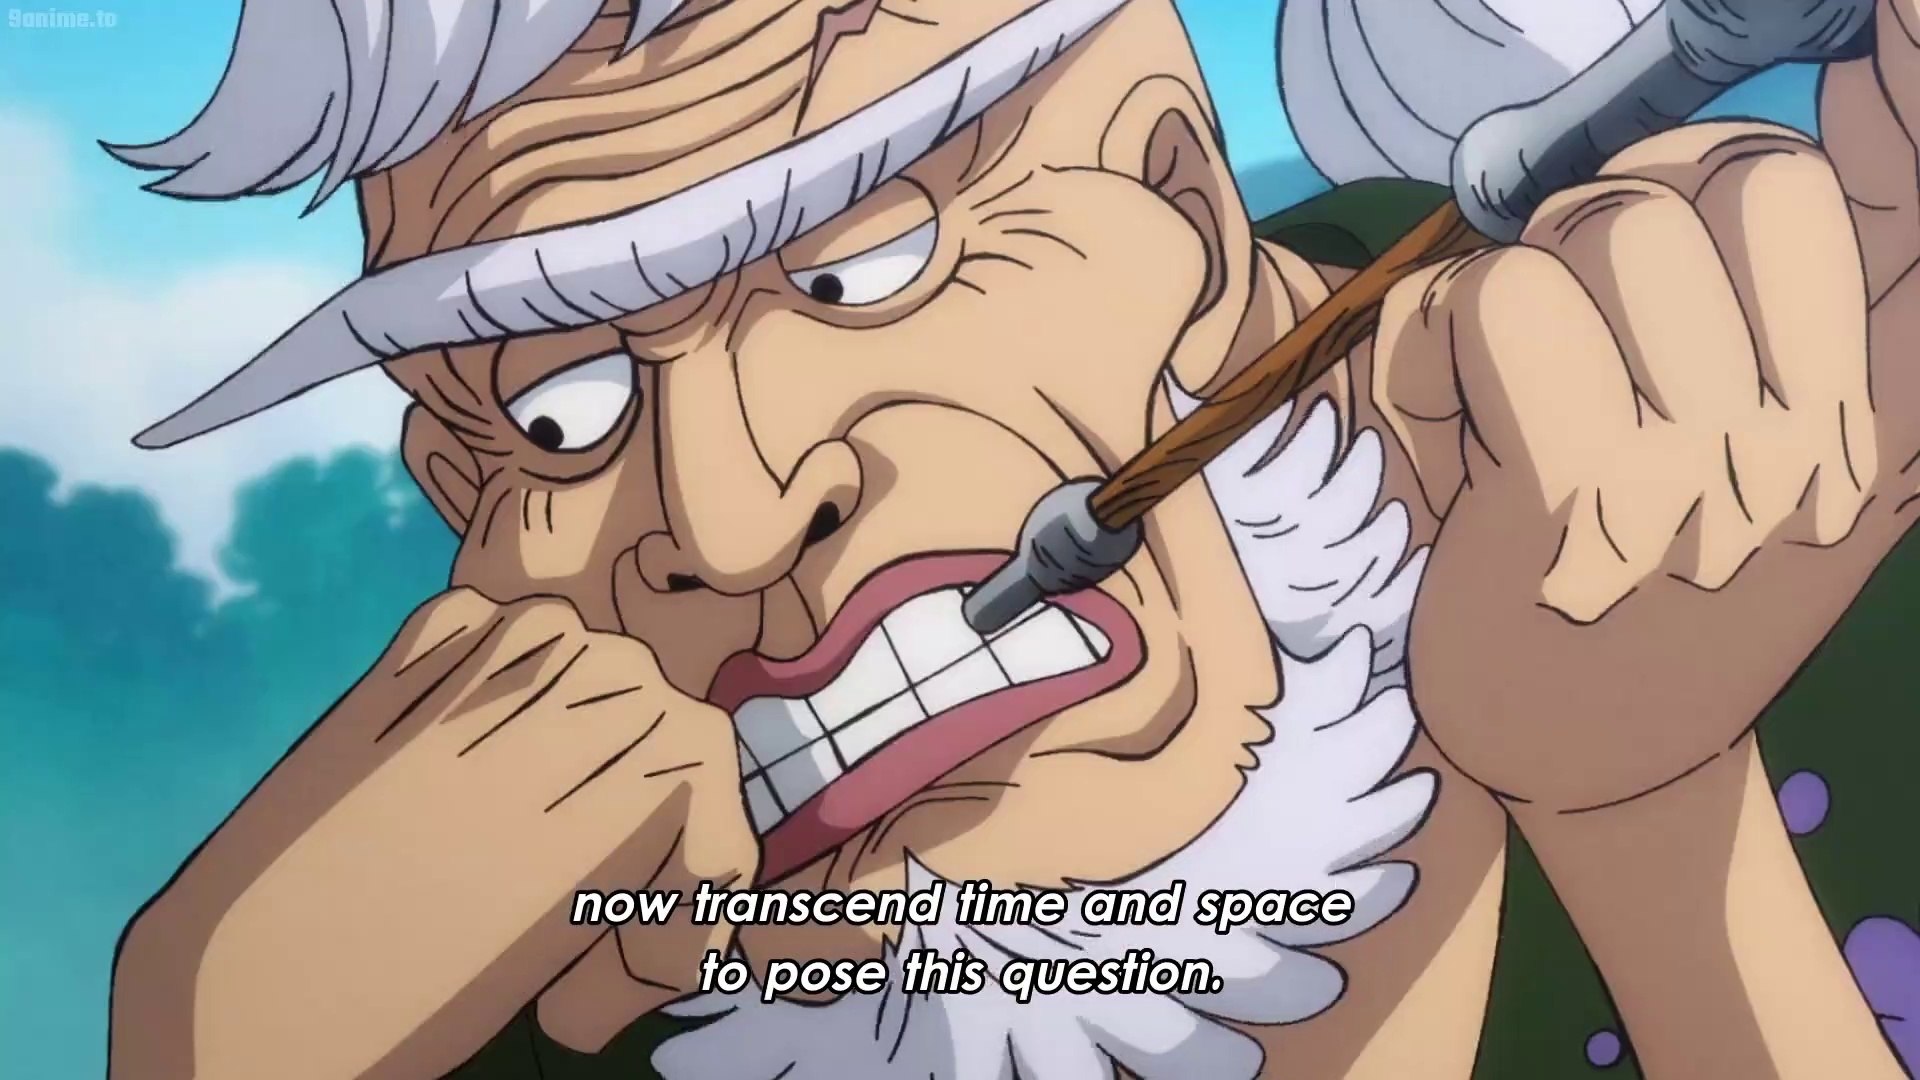 ENMA TAKES OVER?! One Piece Episode 1058 Reaction 